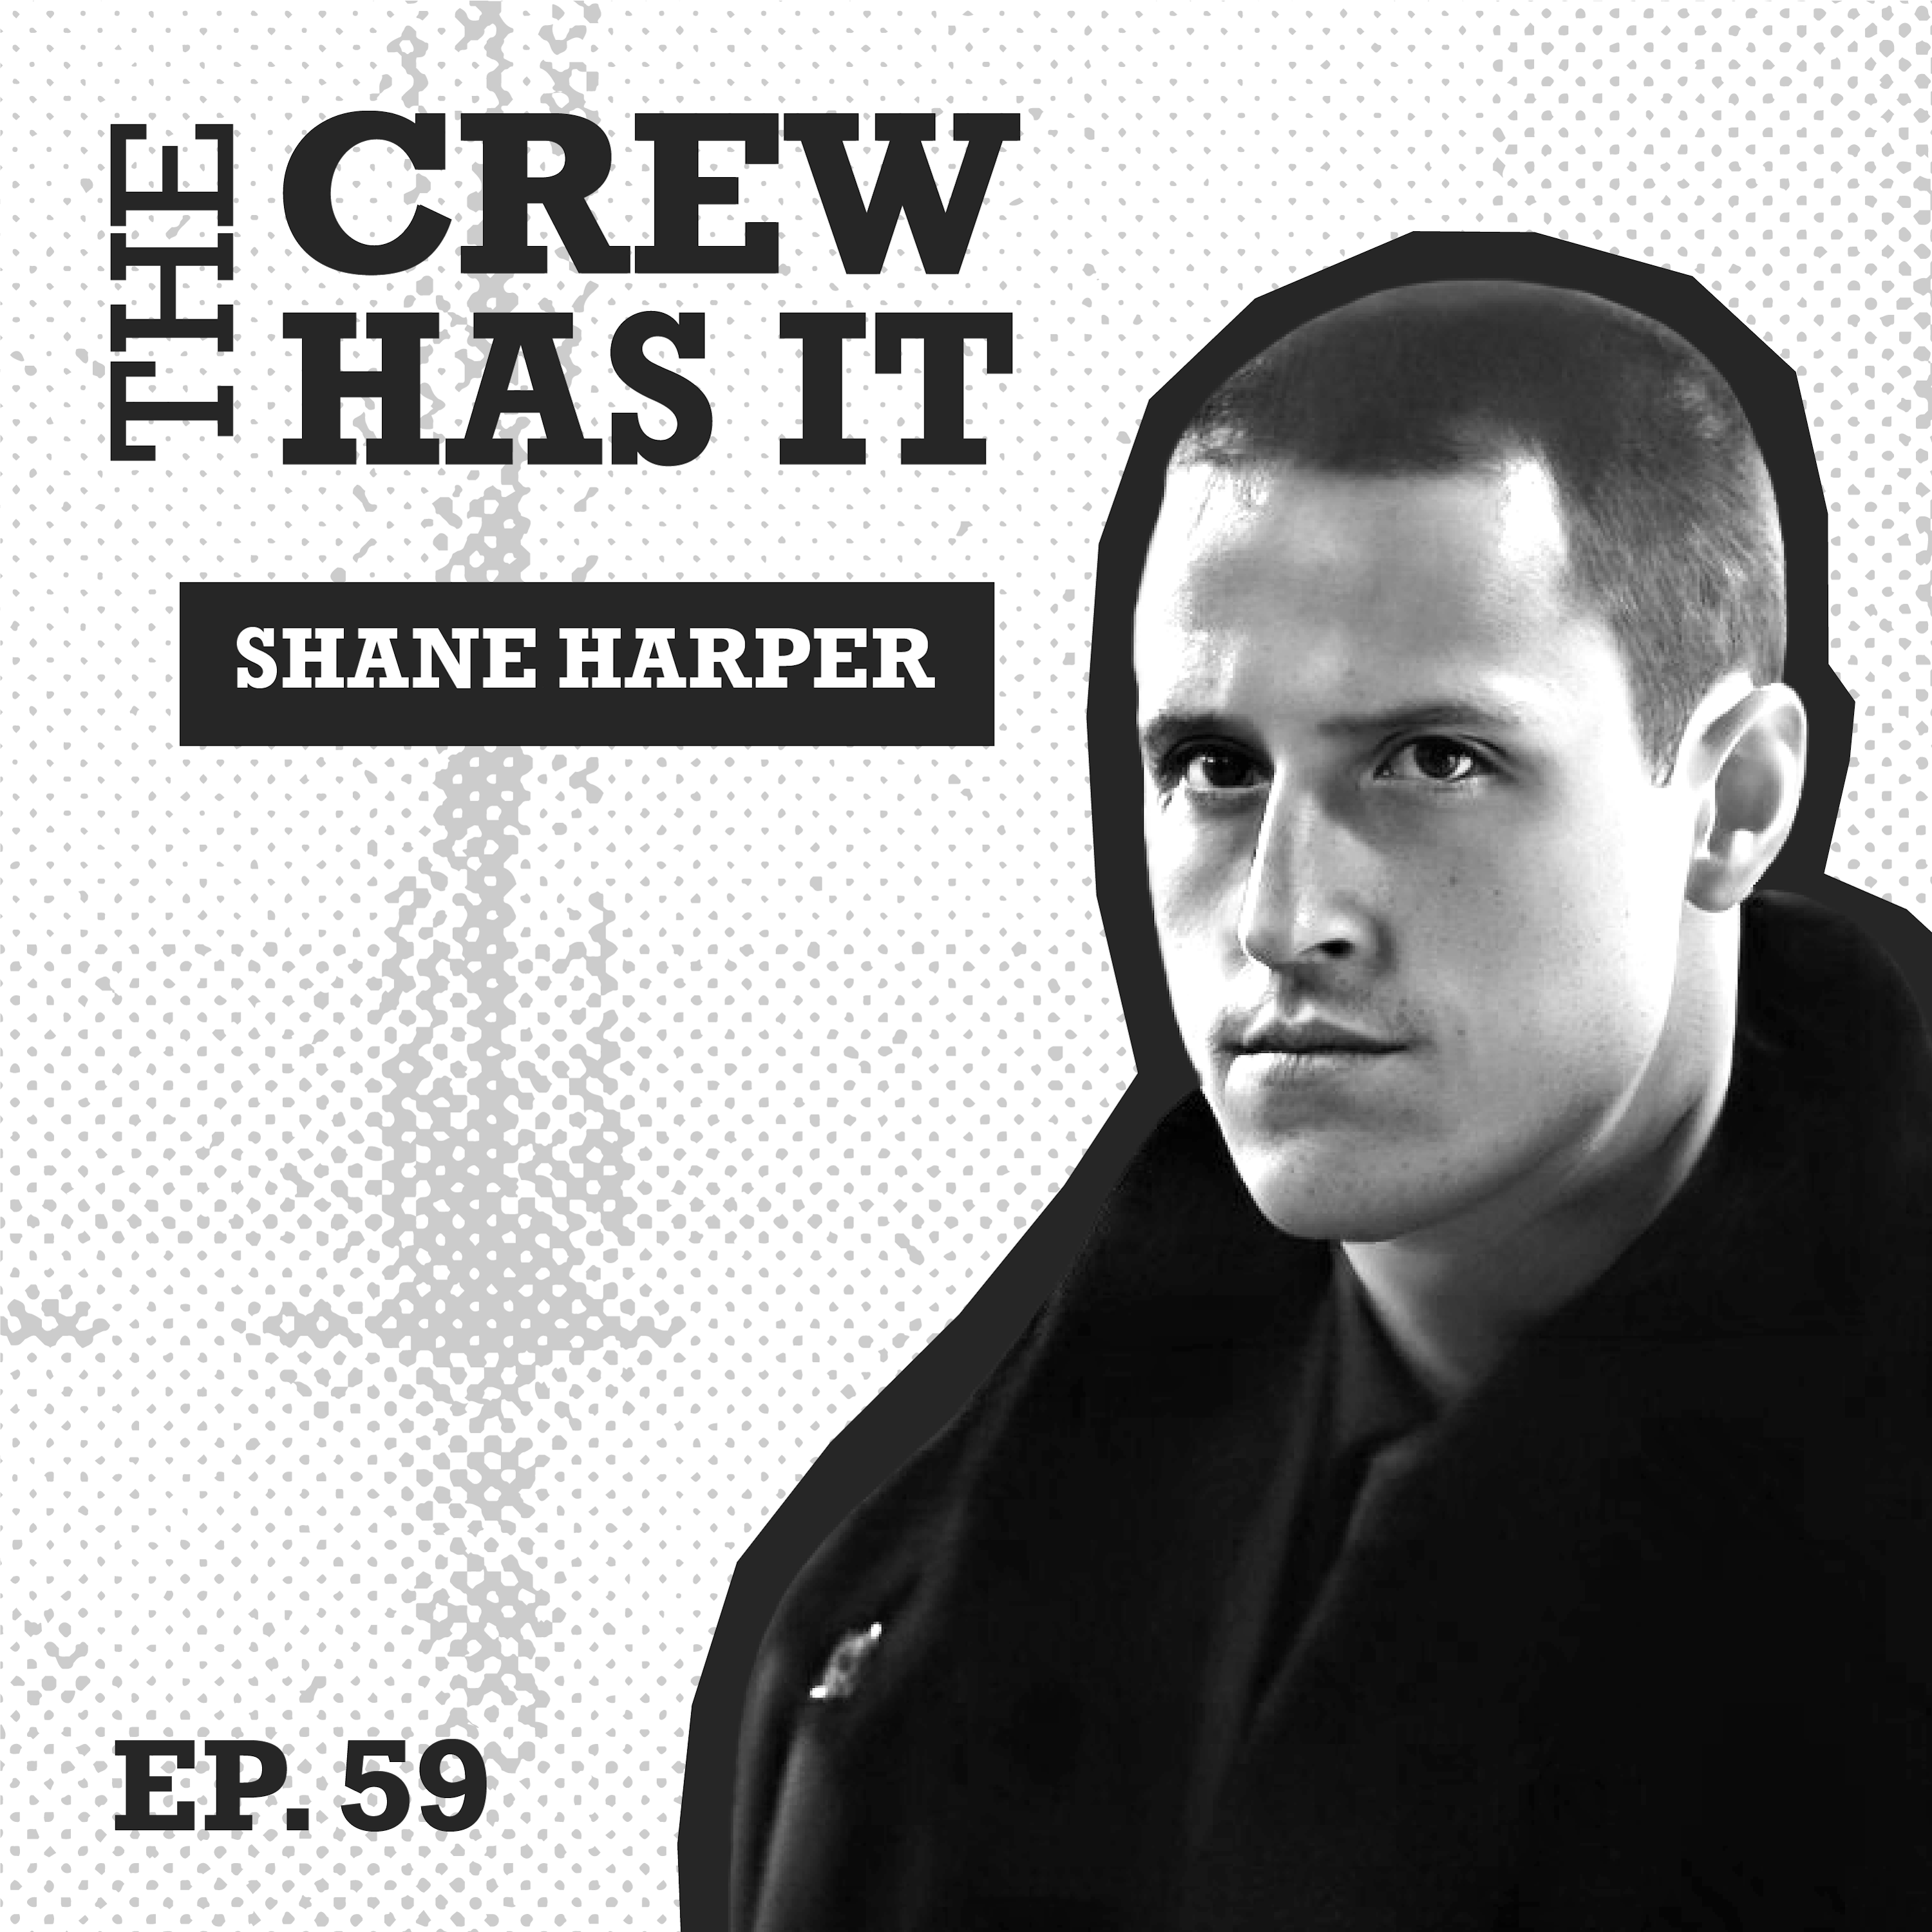 Shane Harper aka Vic Flynn talks Power IV: Force | Ep 59 | The Crew Has It